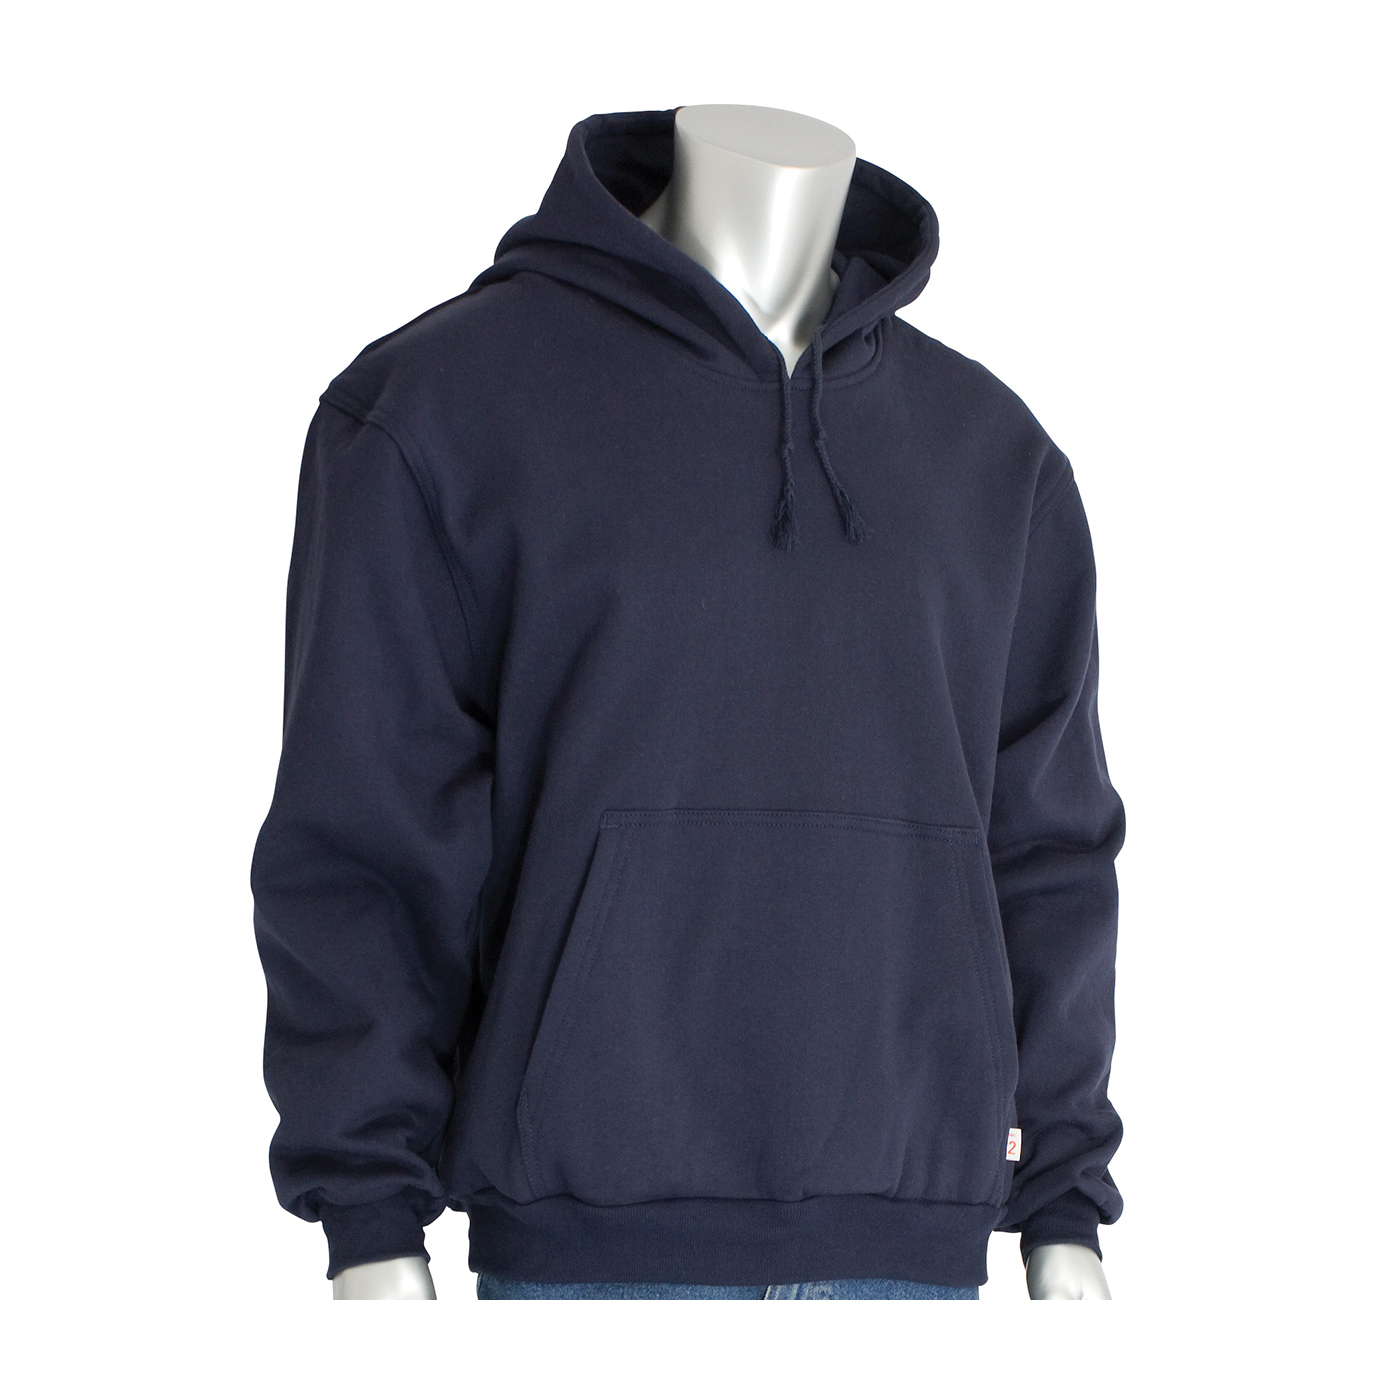 PIP® 385-FRPH-NV/3X Polartec® 385-FRPH Arc and Flame Resistant Sweatshirt, 3XL, Navy, FR Fleece Knit/100% Cotton, 34 in Regular, 35 in Tall L